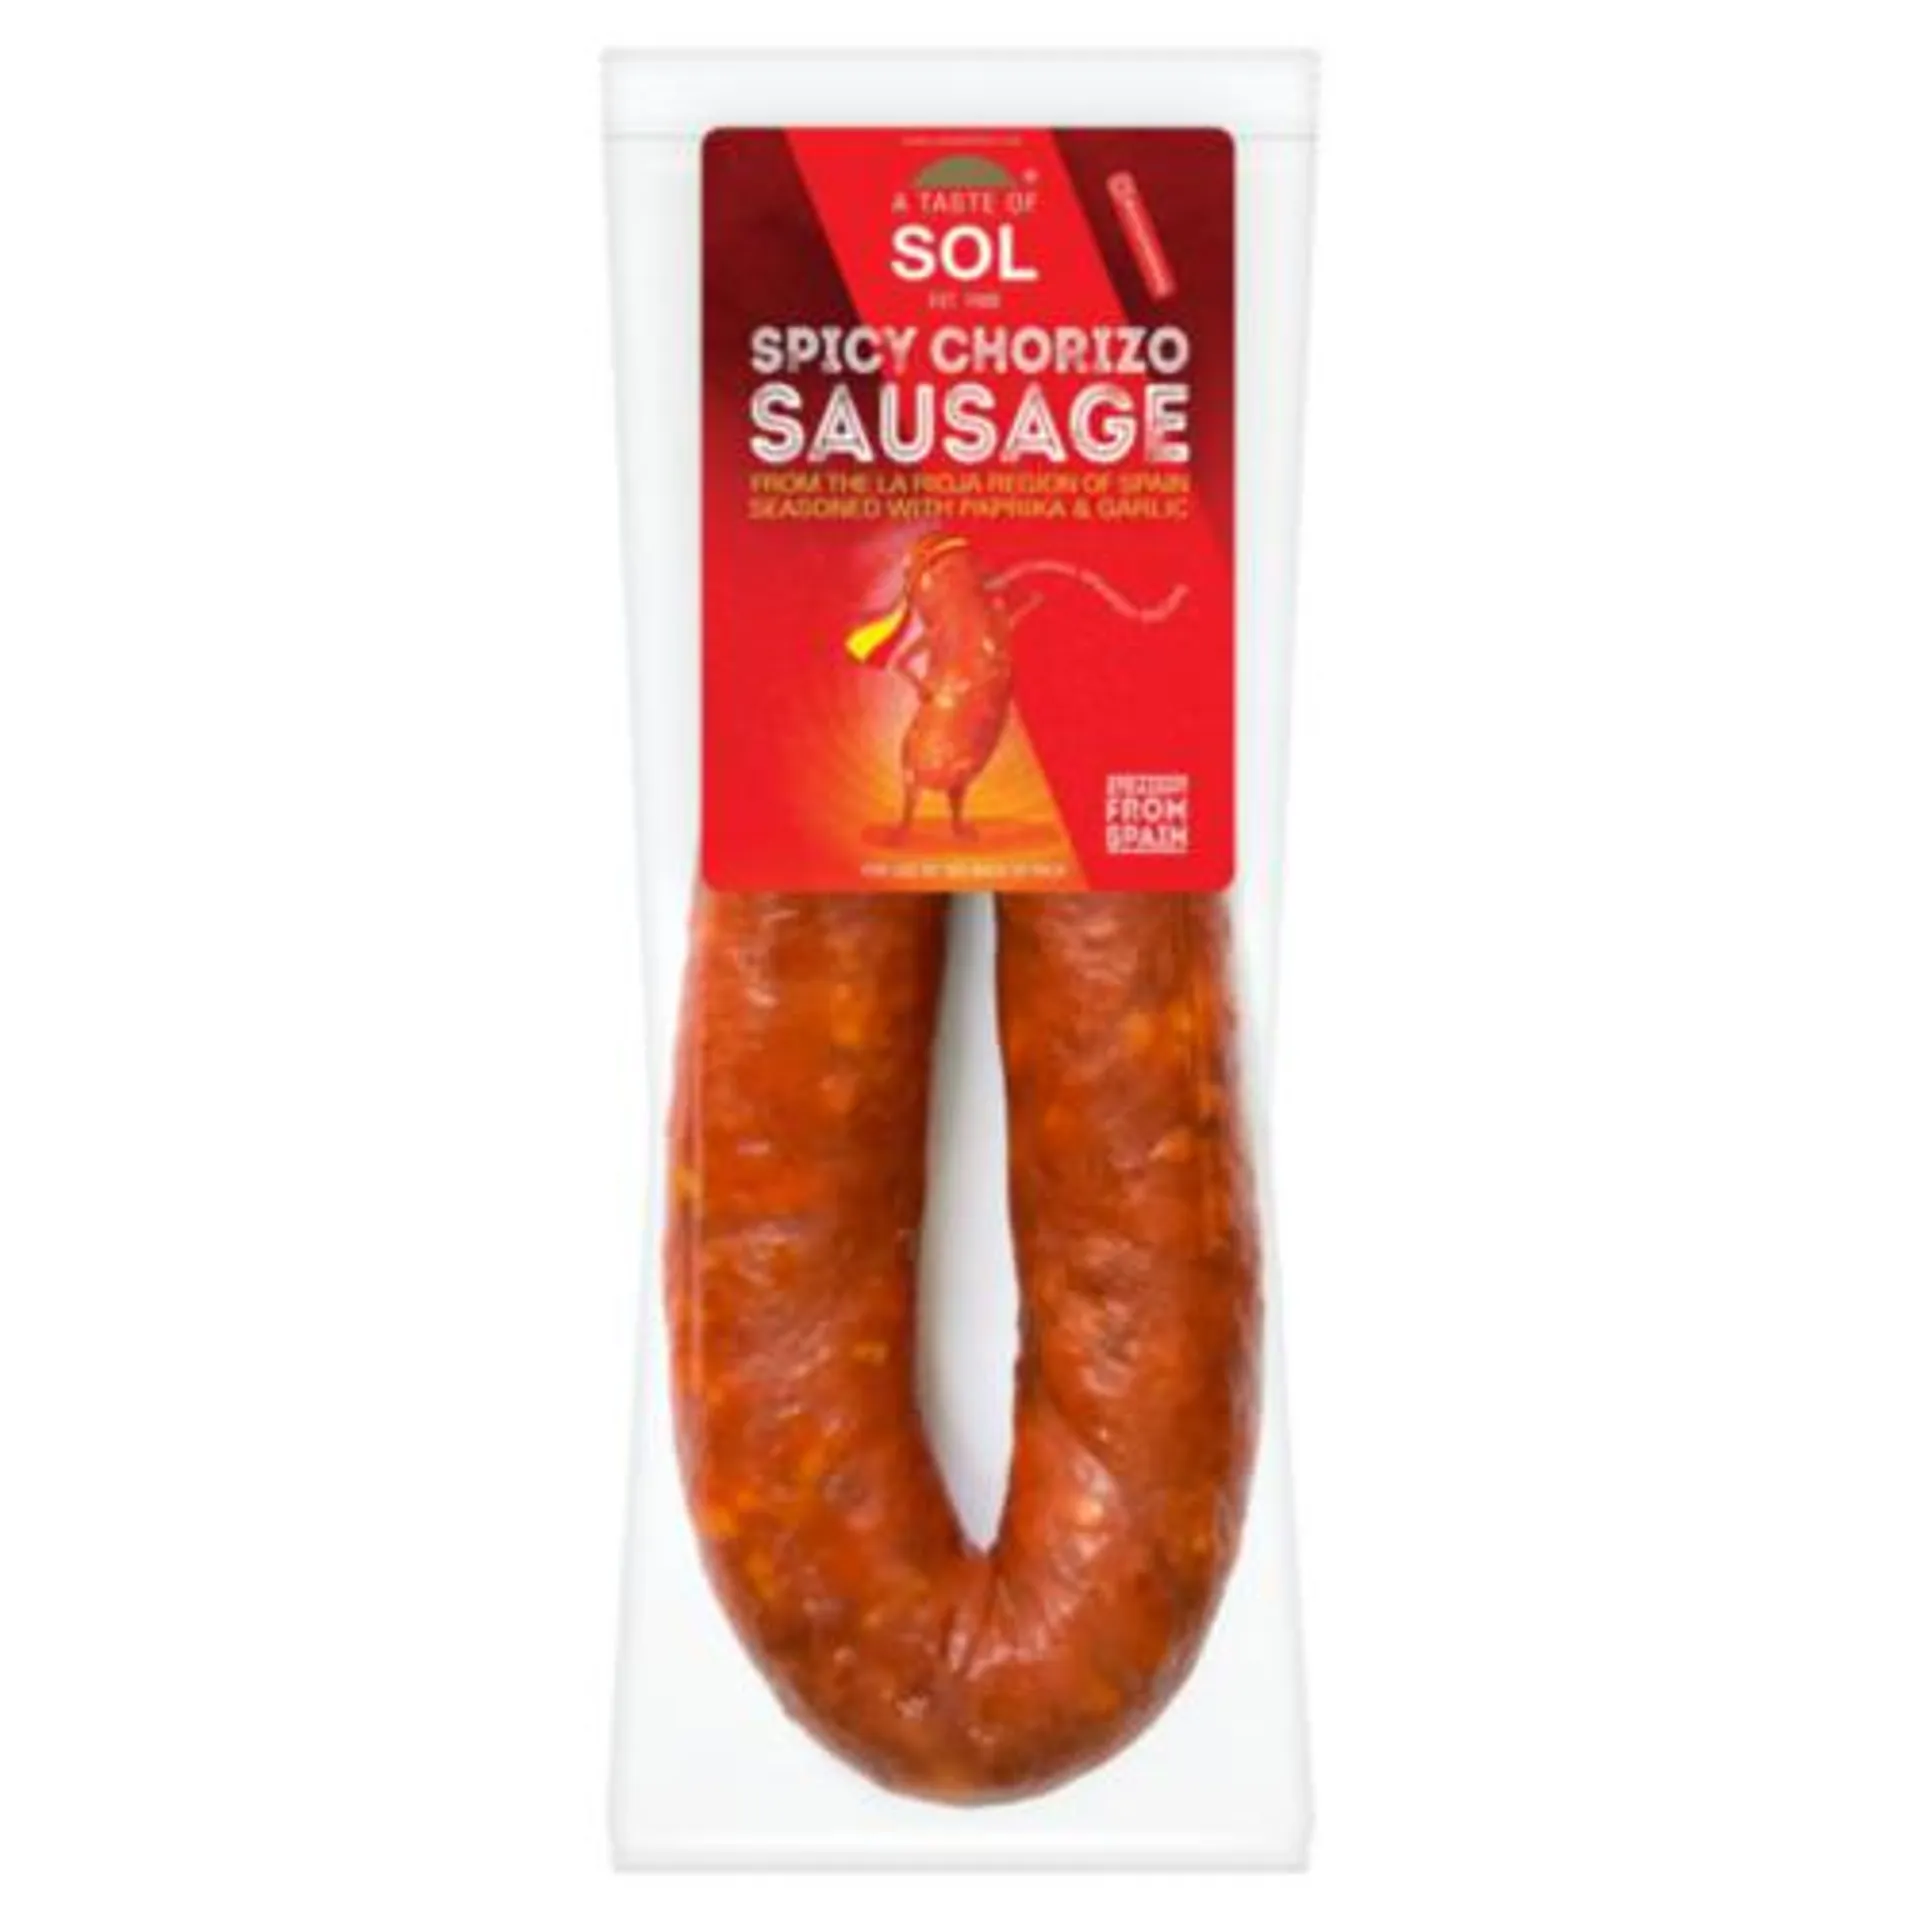 A Taste of Sol Spicy Chorizo Sausage